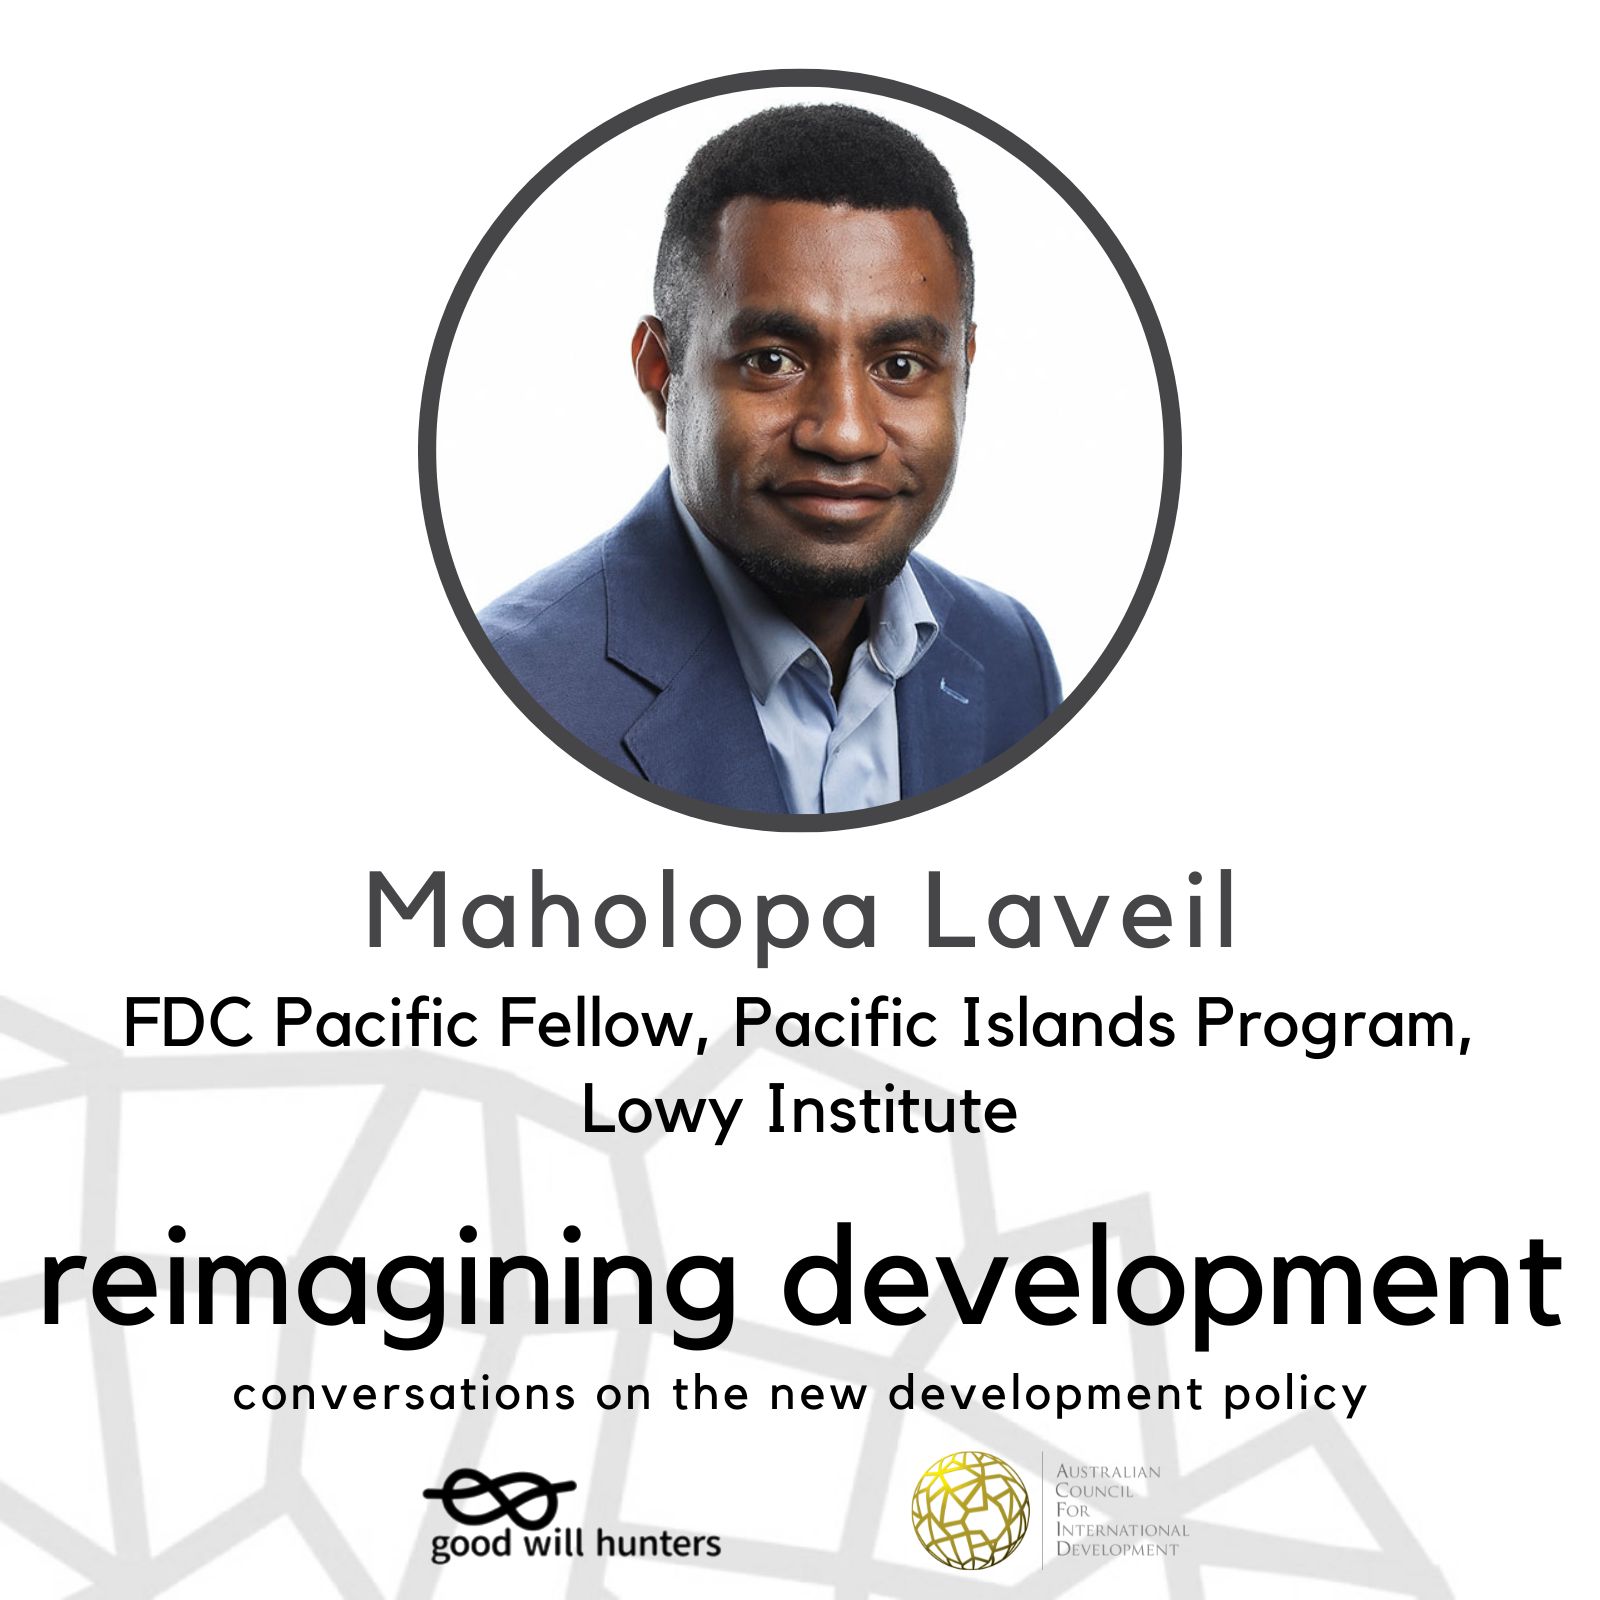 Maholopa Laveil FDC Fellow, Lowy Institute on Reimagining Development